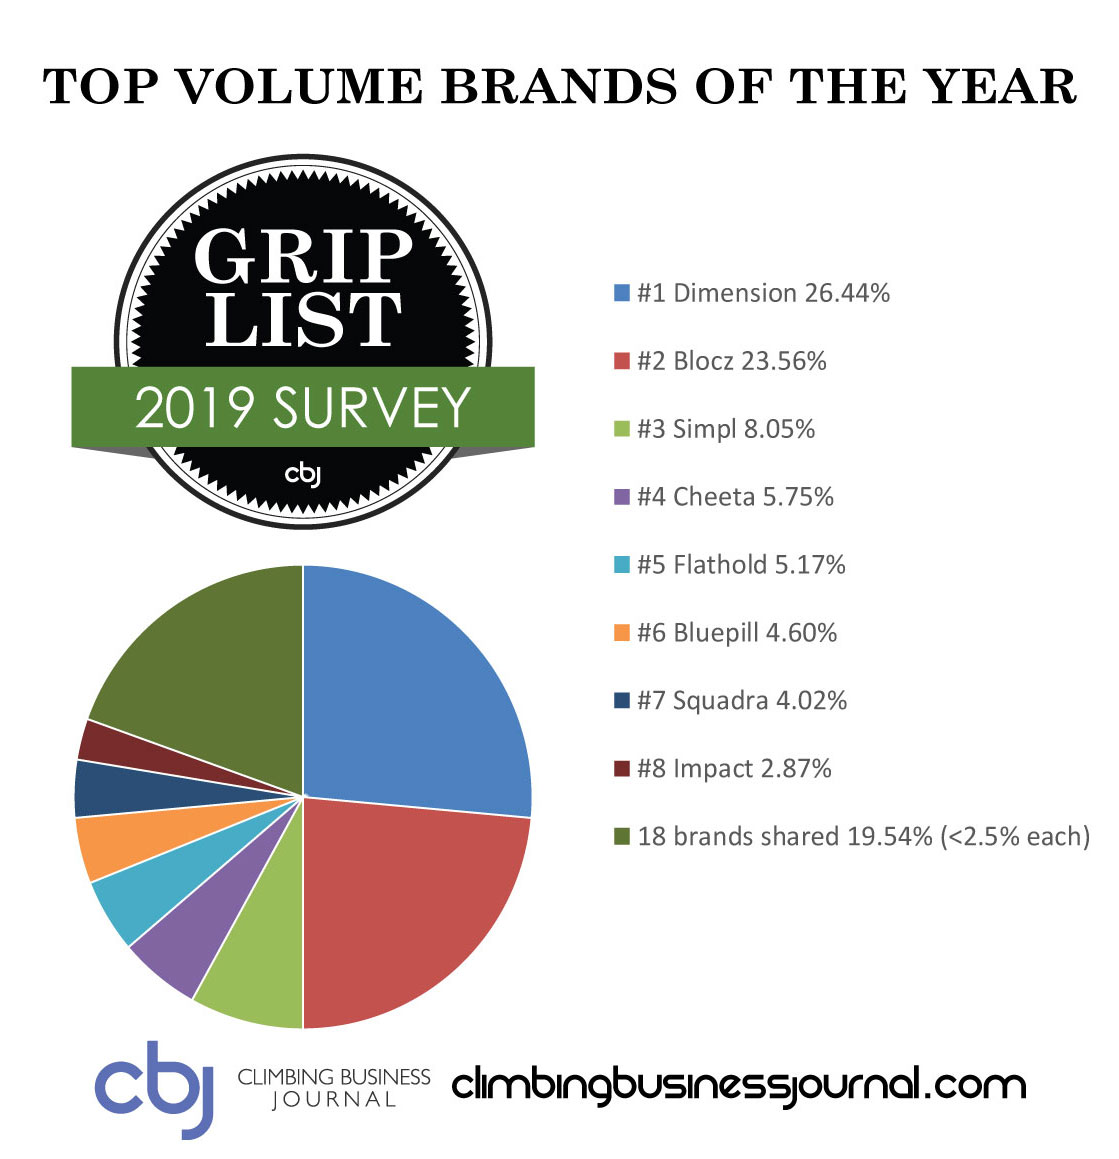 2019 Grip List top volume brands